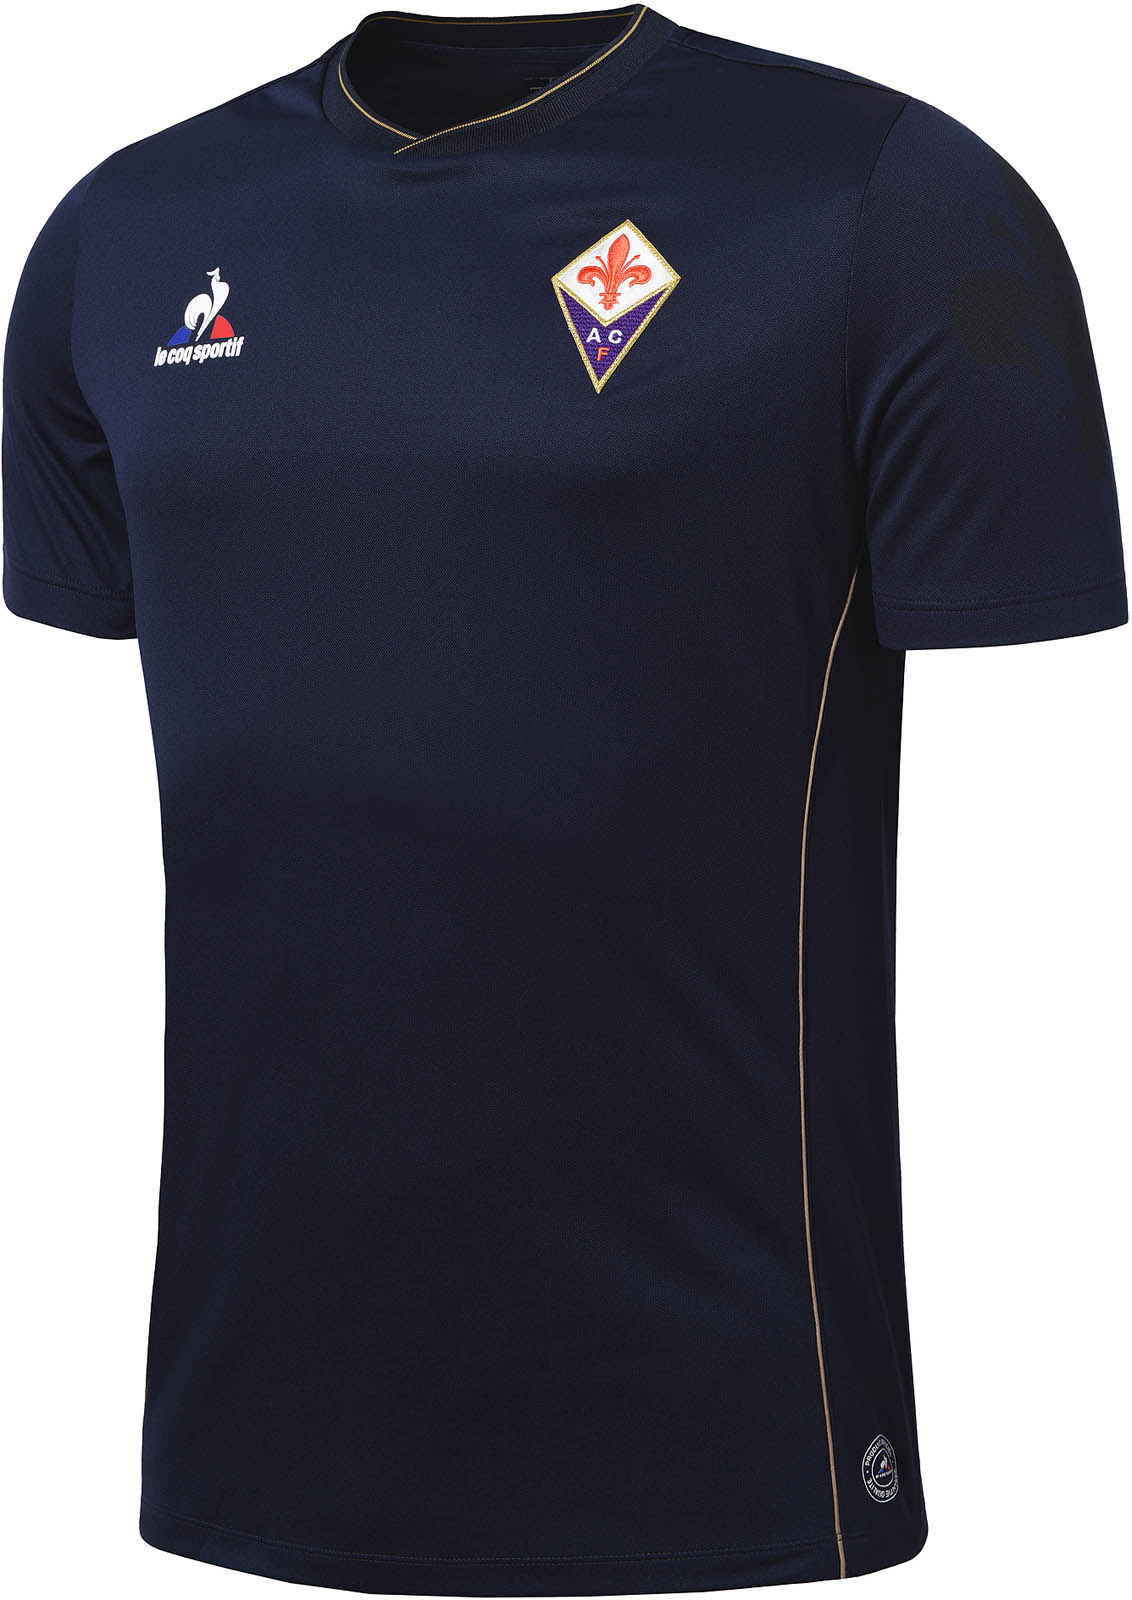 Le Coq Sportif Fiorentina 15-16 Kits Released - Footy Headlines